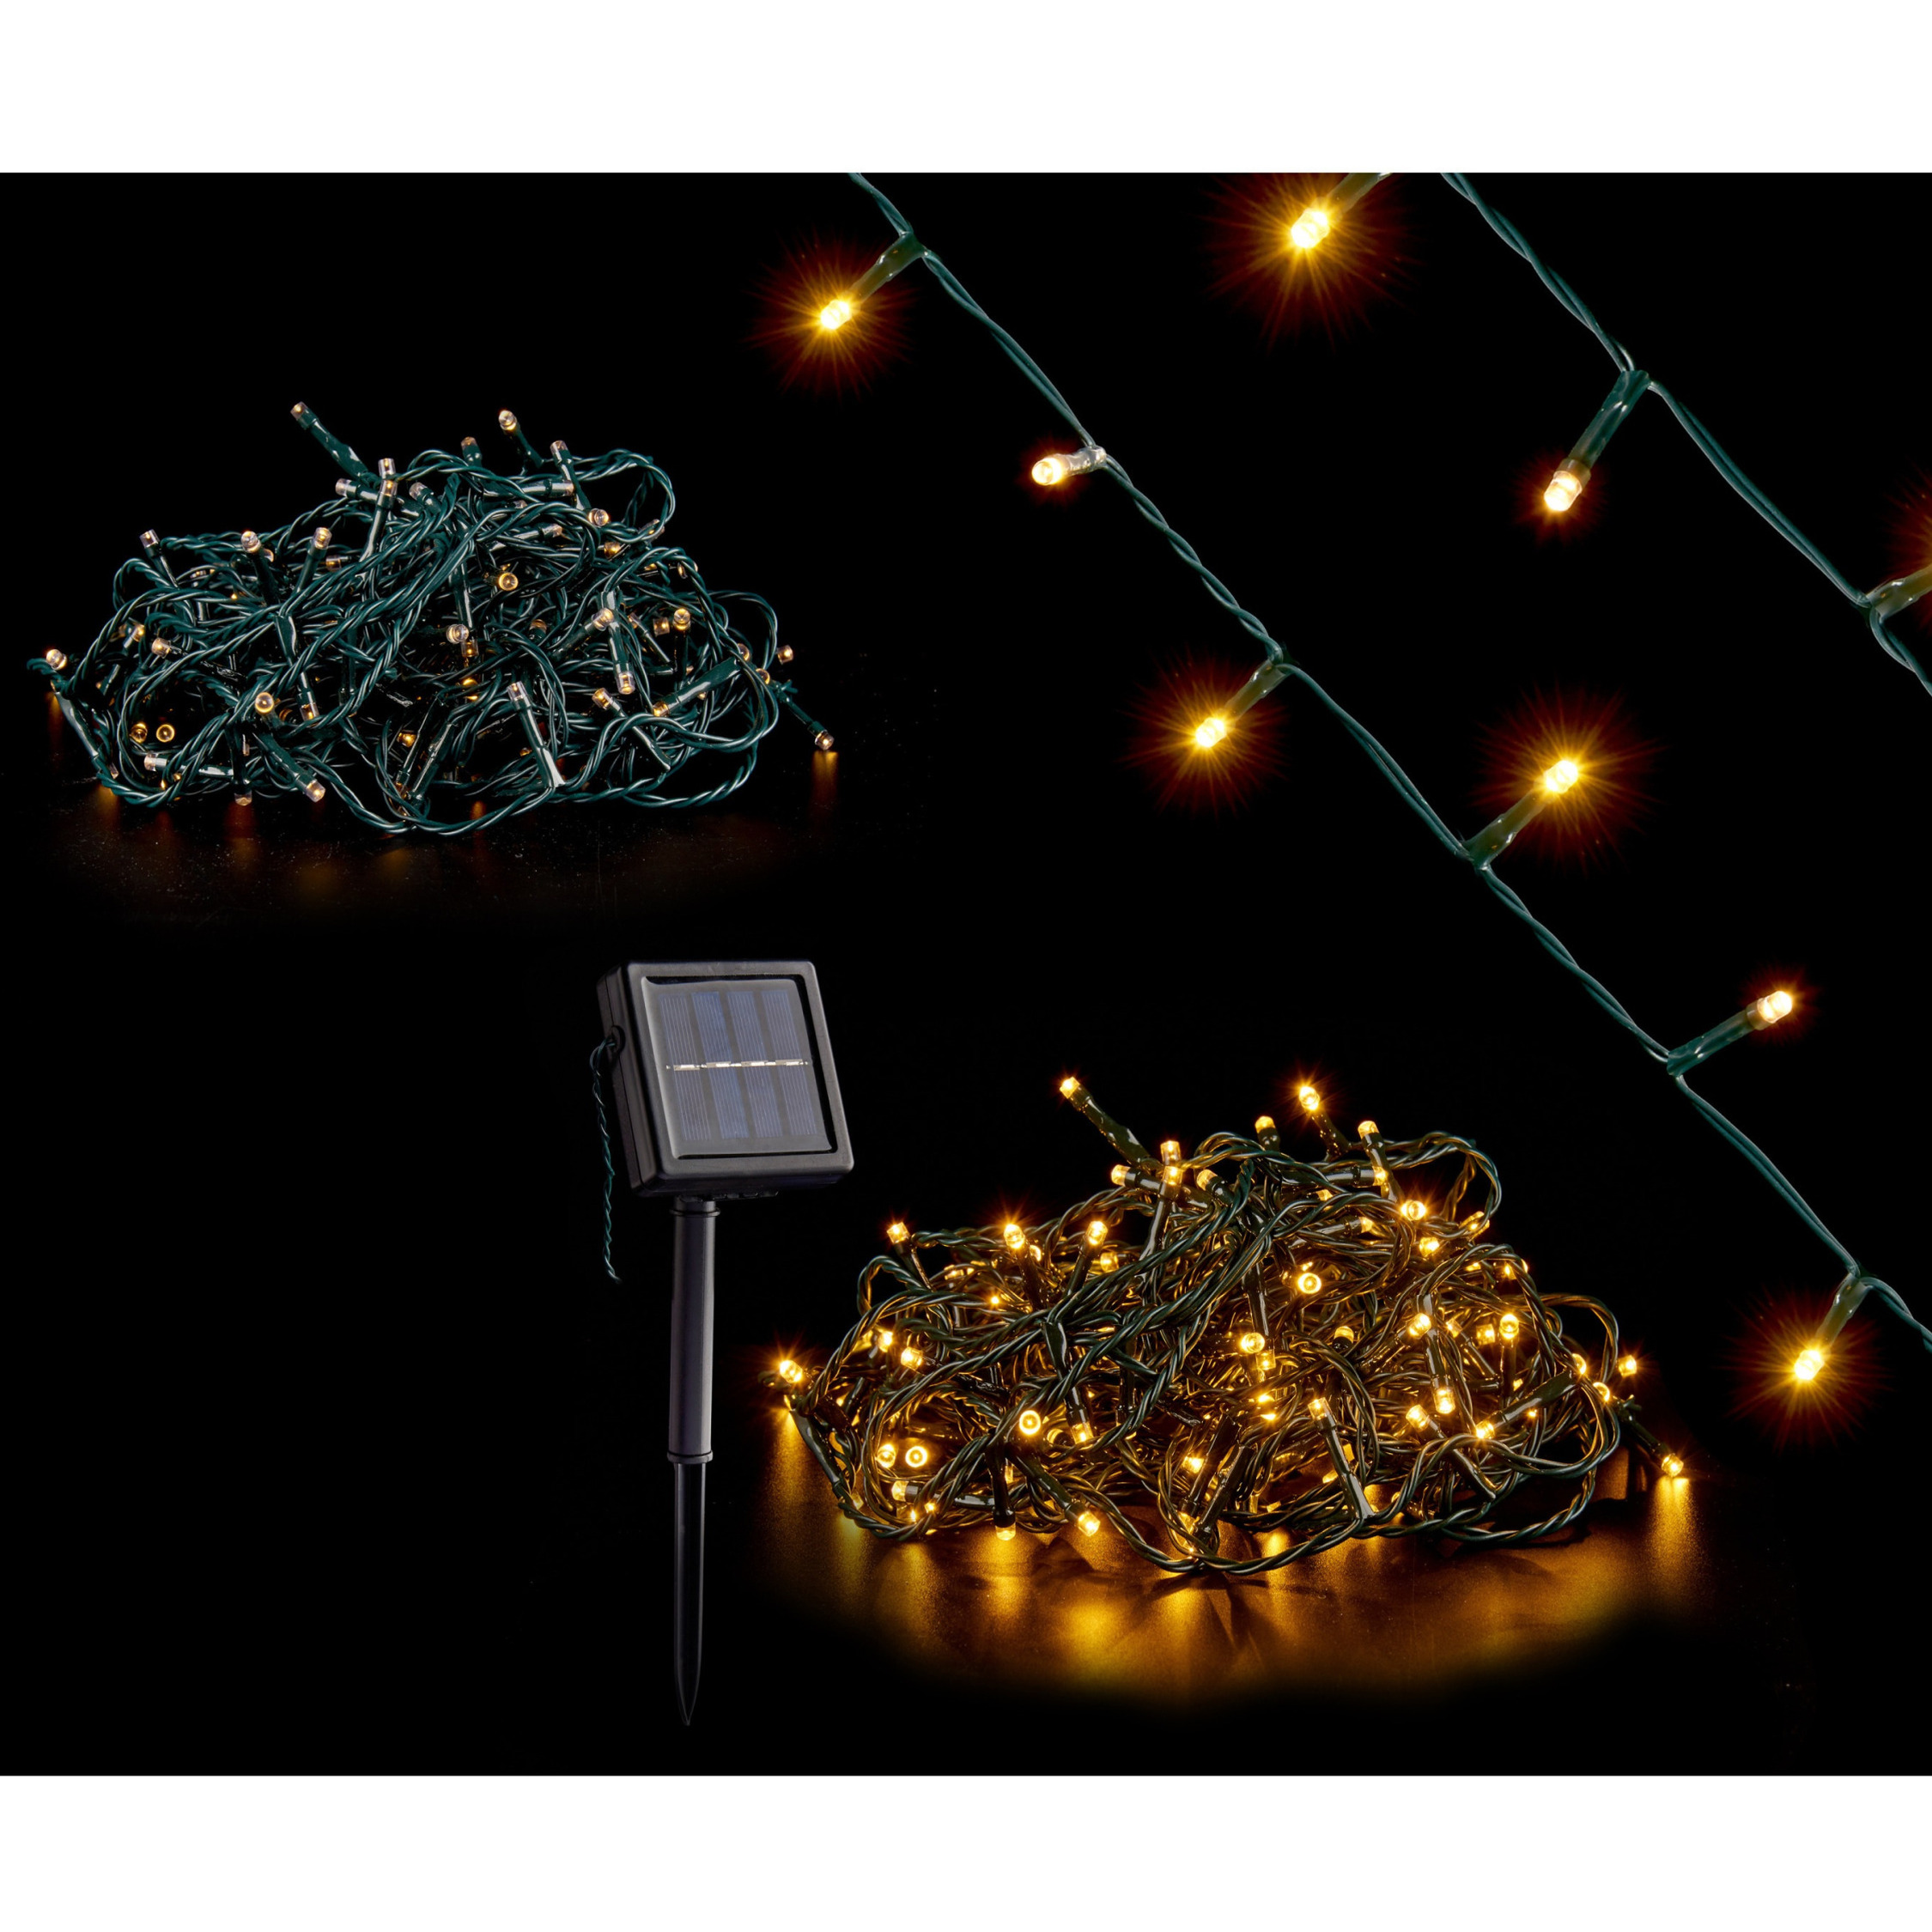 Kerstverlichting-party lights 150 warm witte LED lampjes op zonne-energie